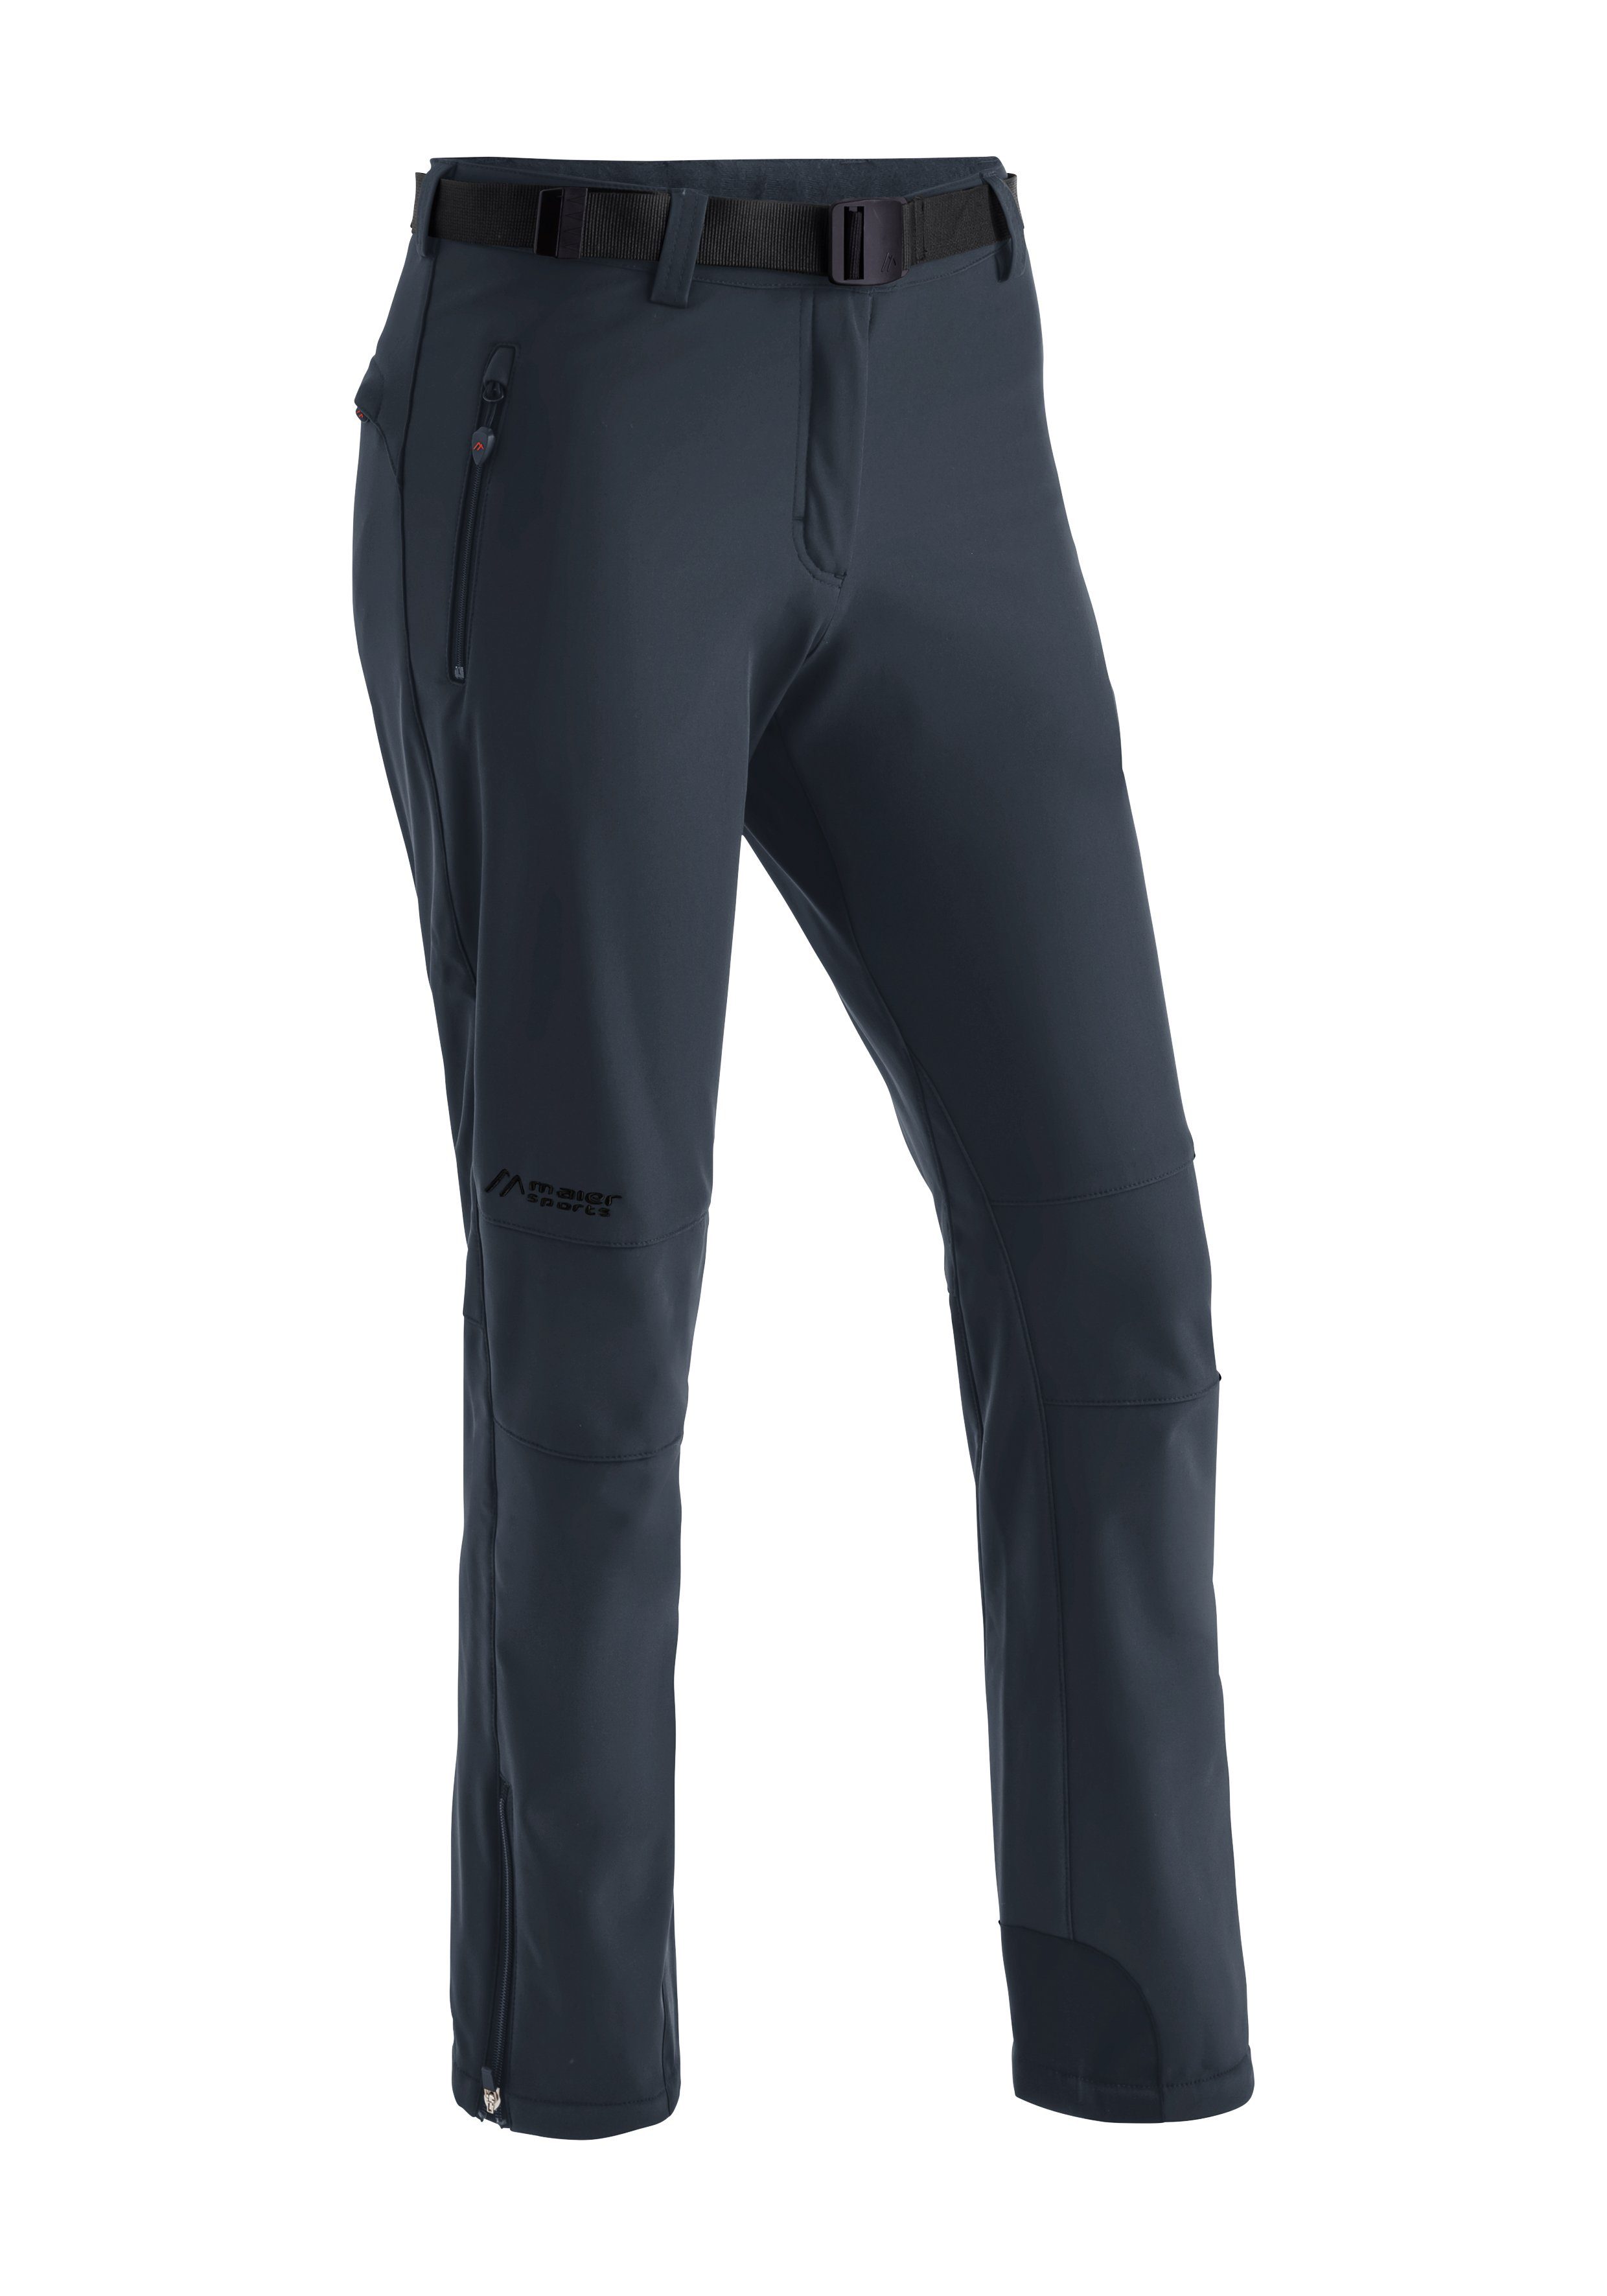 Warme grau Funktionshose und Softshellhose, elastisch winddicht Maier Tech W Pants Sports